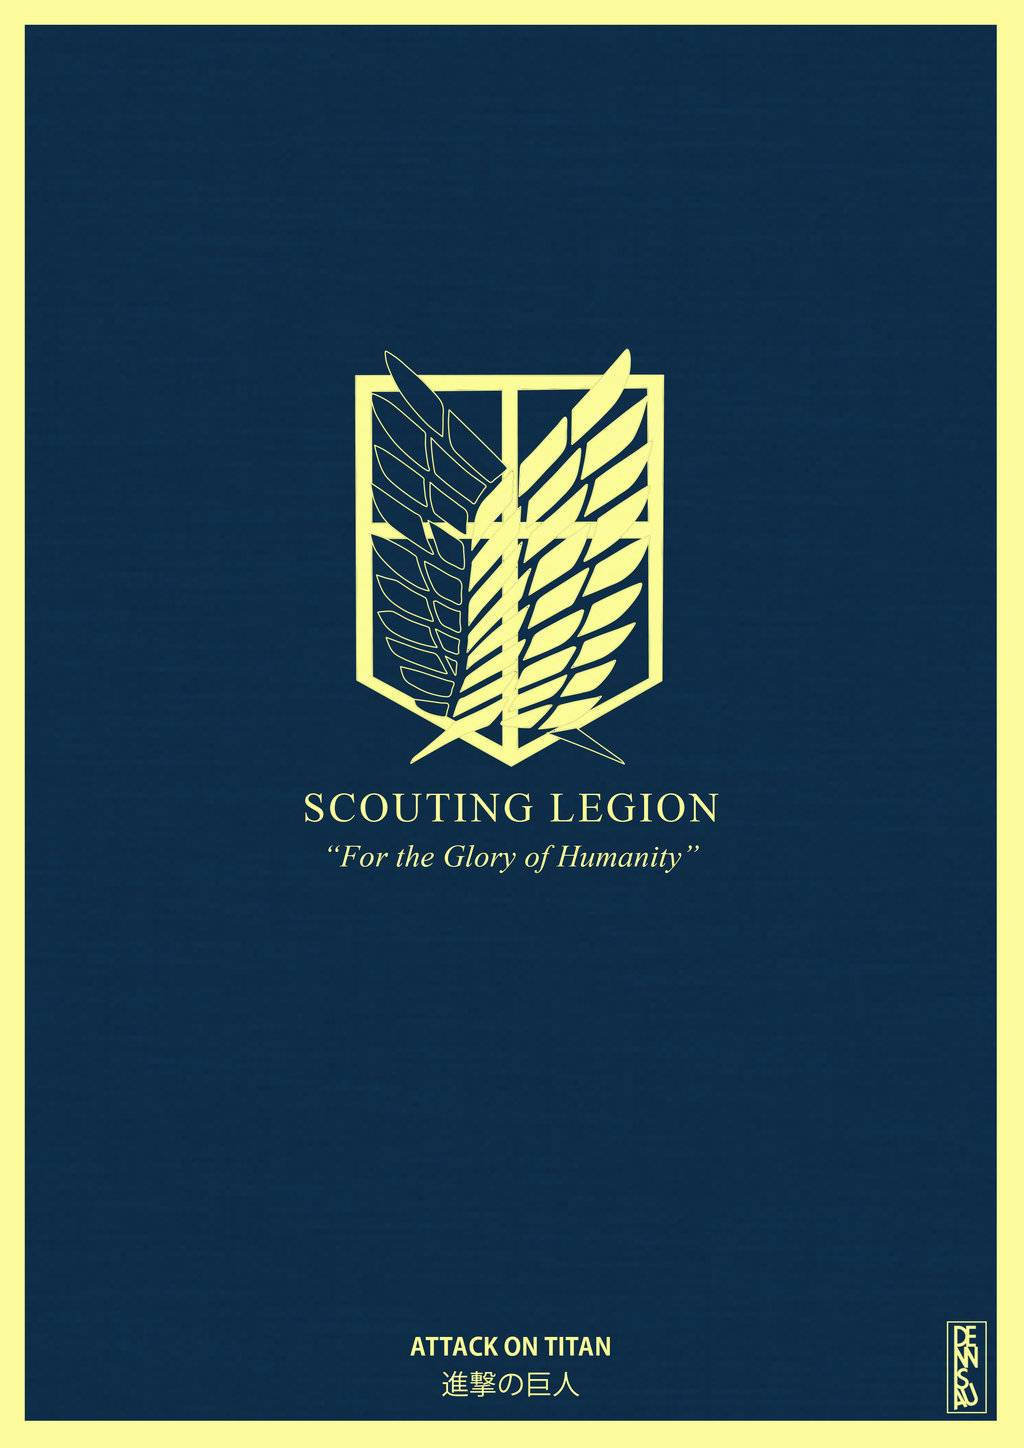 Logo Scouting Legion Angreb på Titan iPhone Wallpaper Wallpaper